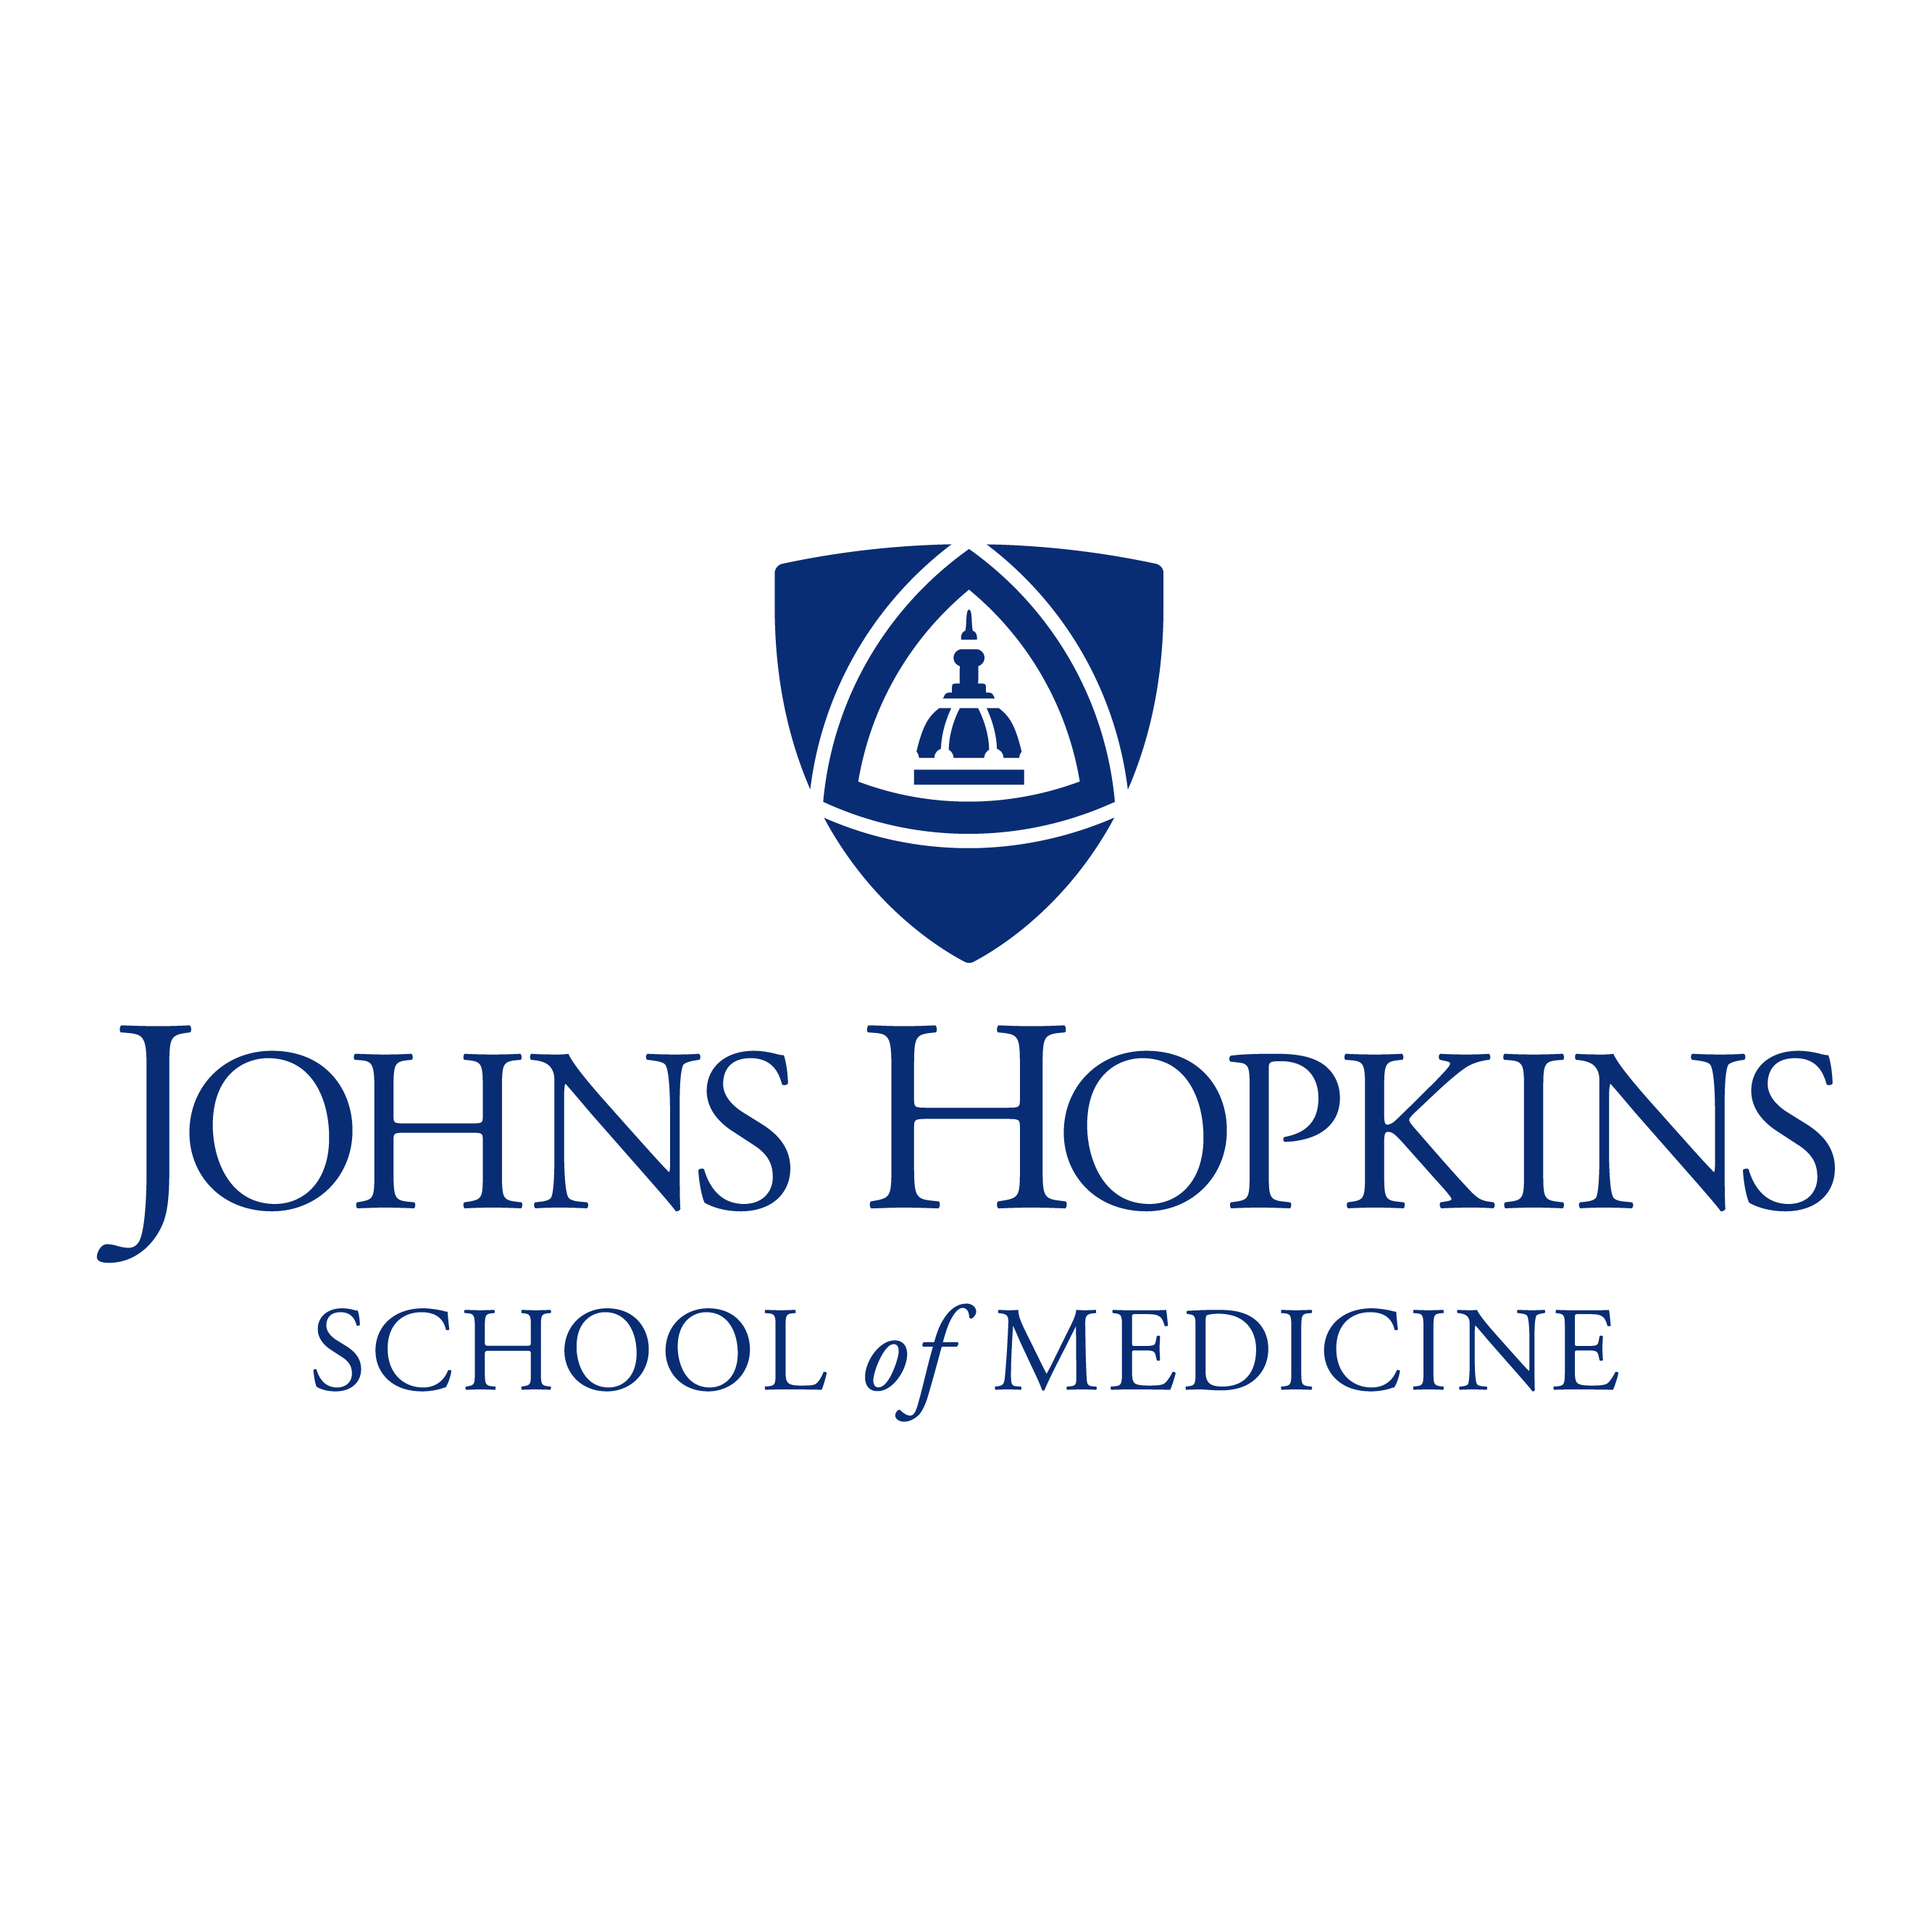 Image shows Johns Hopkins School of Medicine logo.